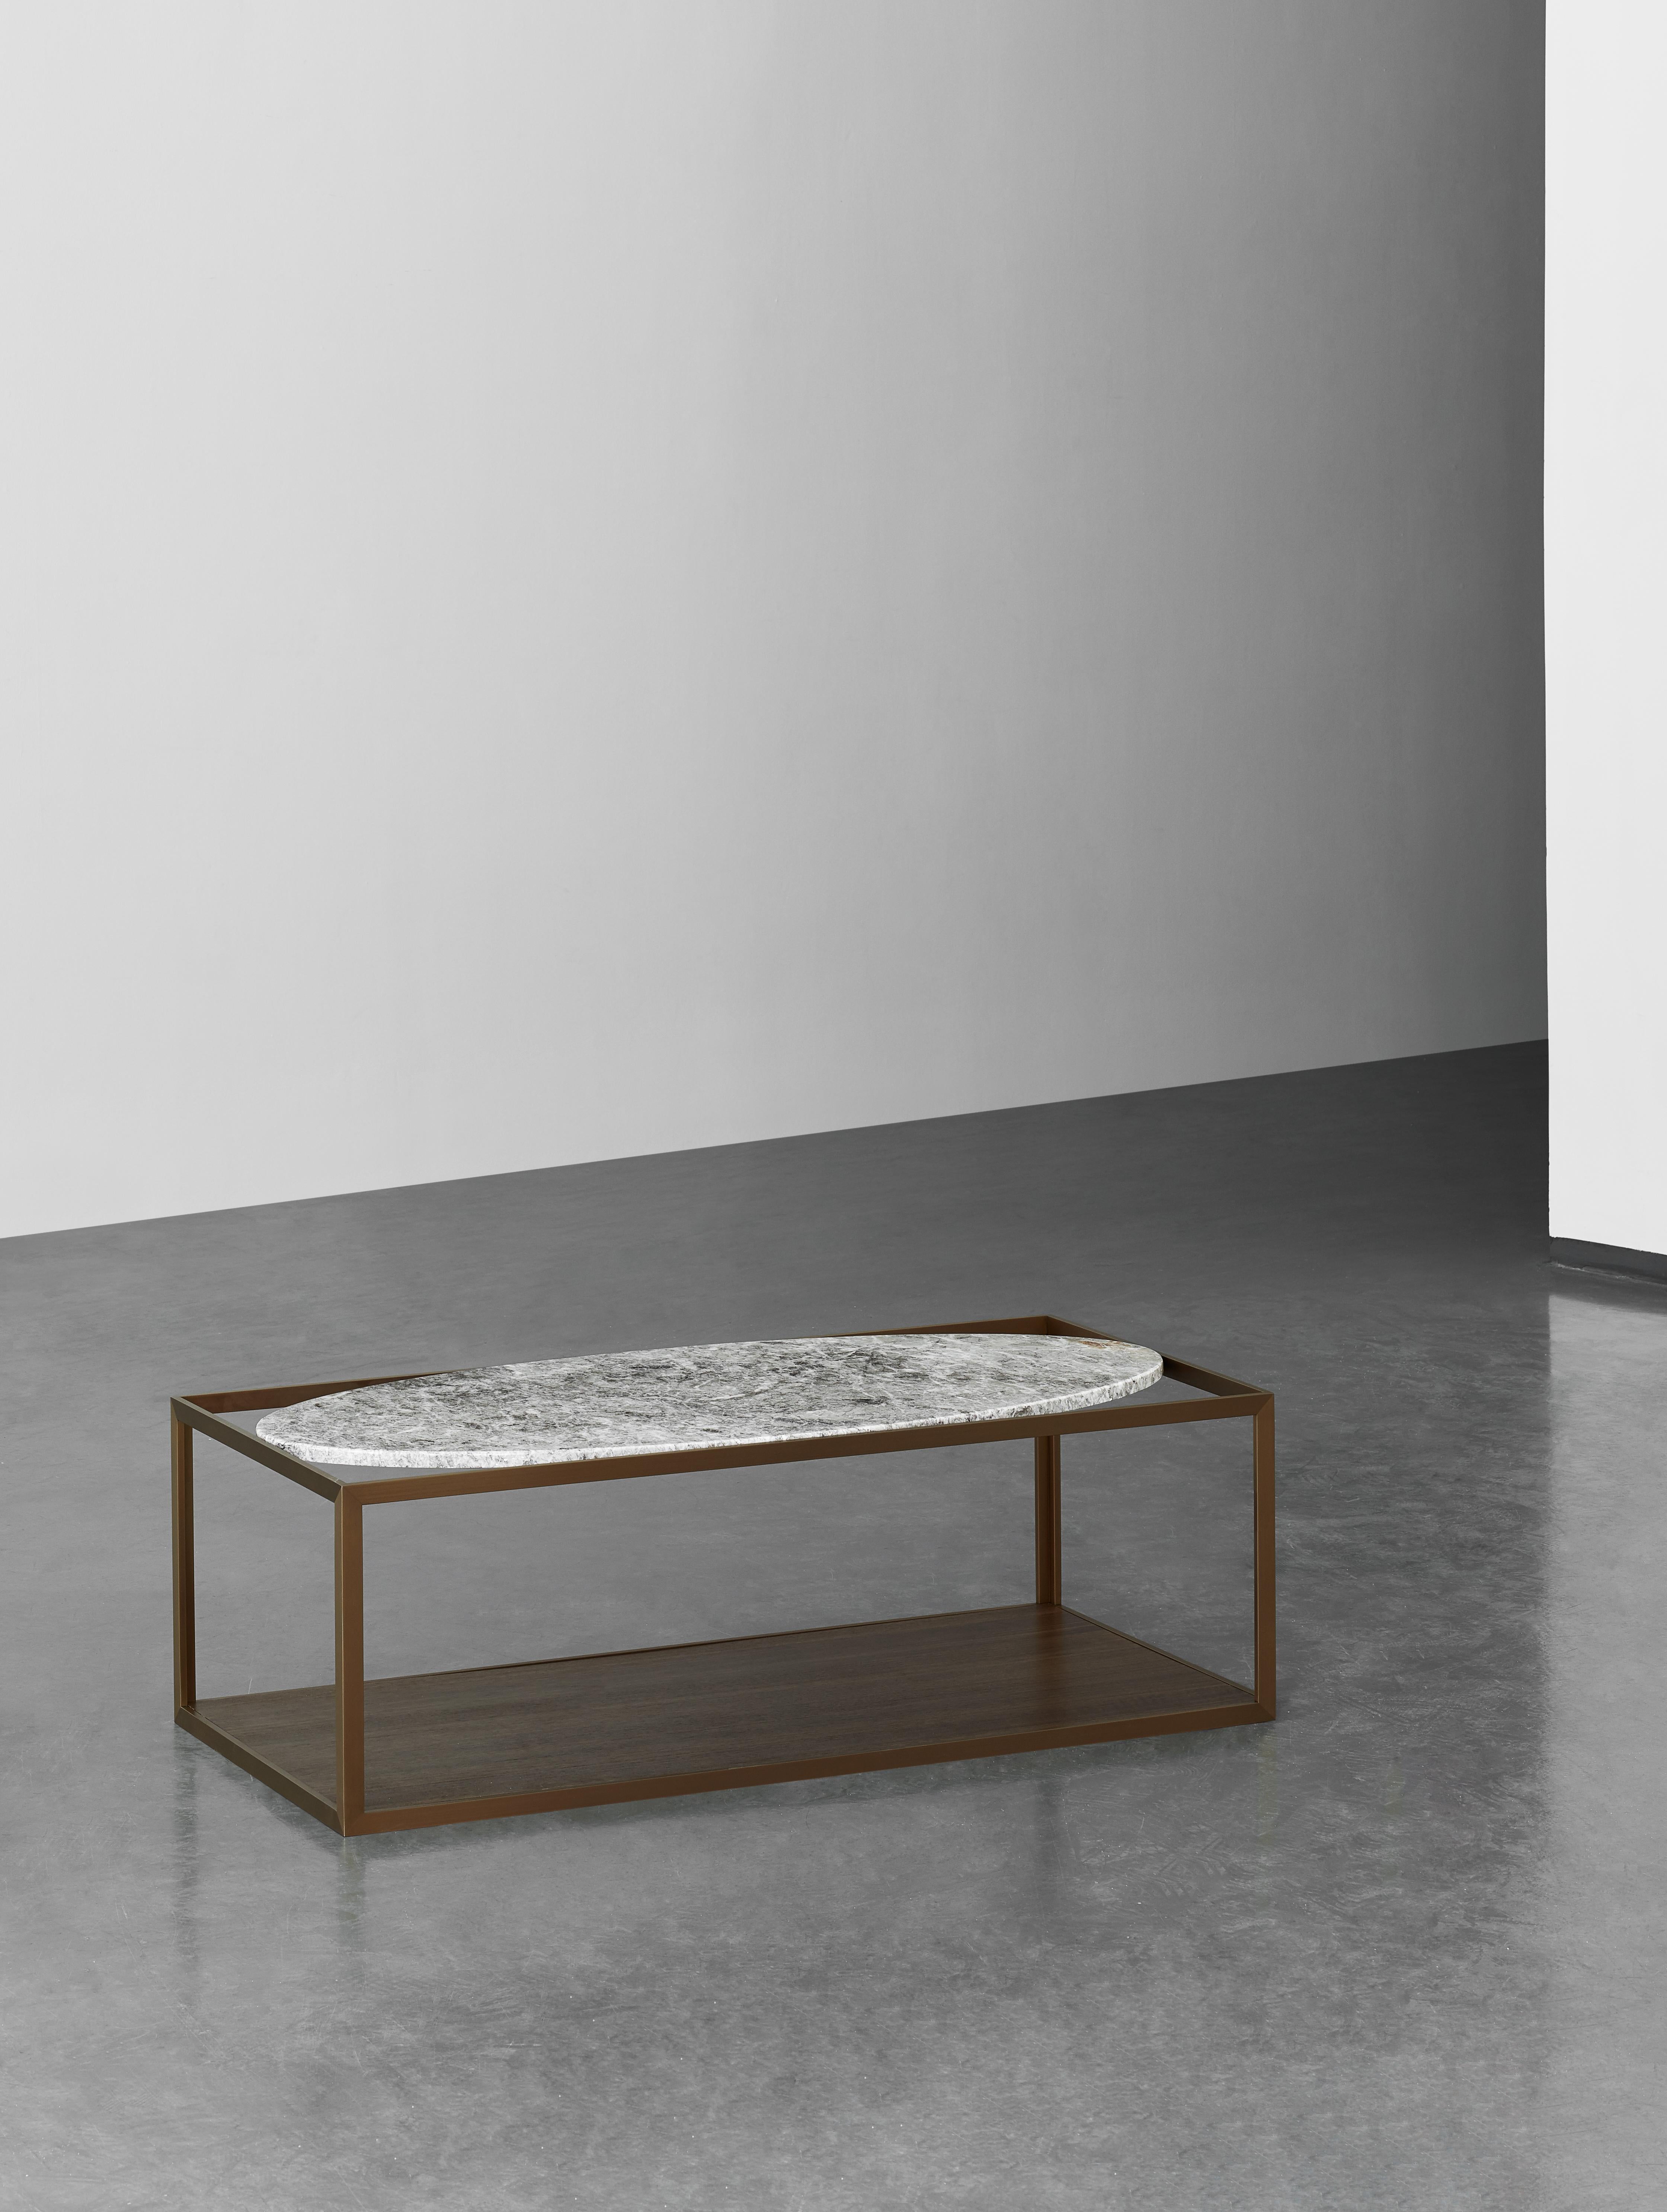 Contemporary NORDST GAARD Coffee Table, Italian Grey Rain Marble, Danish Modern Design, New For Sale